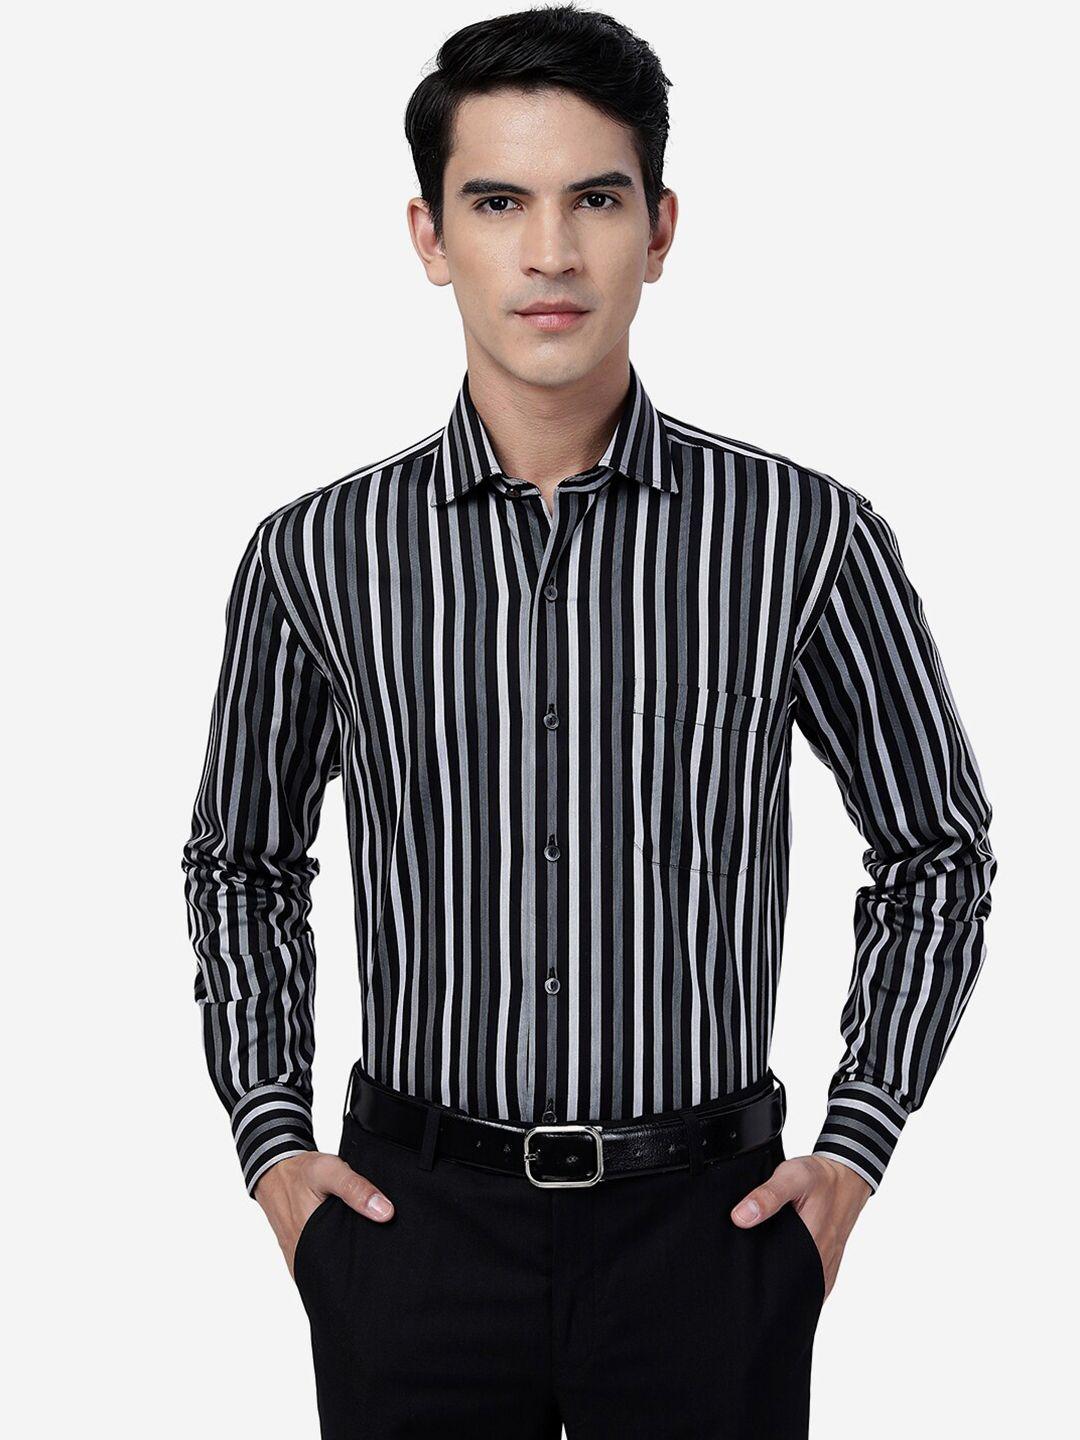 metal slim fit vertical striped cotton formal shirt